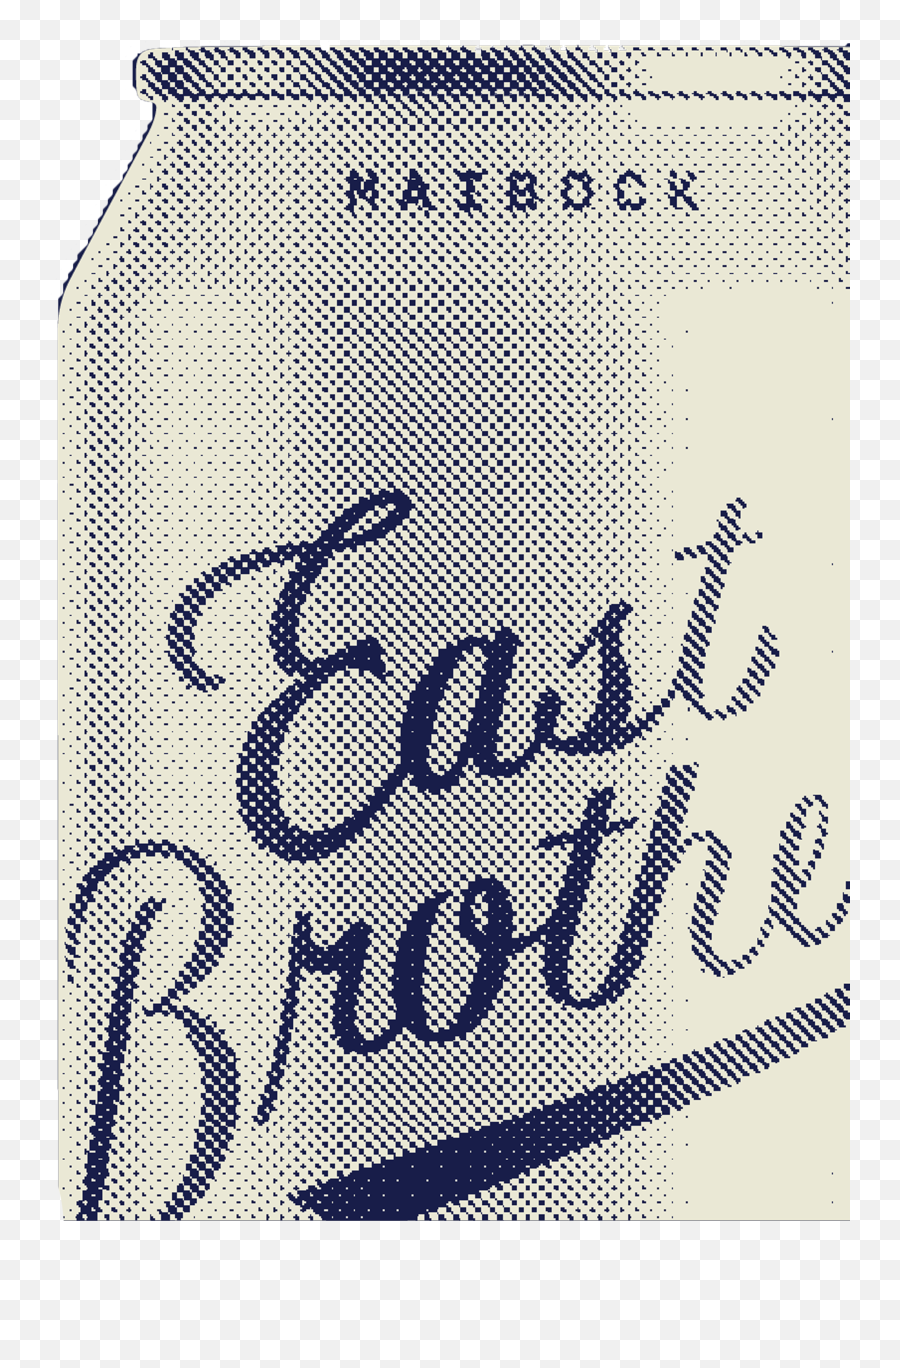 East Brother Beer Co - Dot Emoji,Jaime And Peter Real Emotion